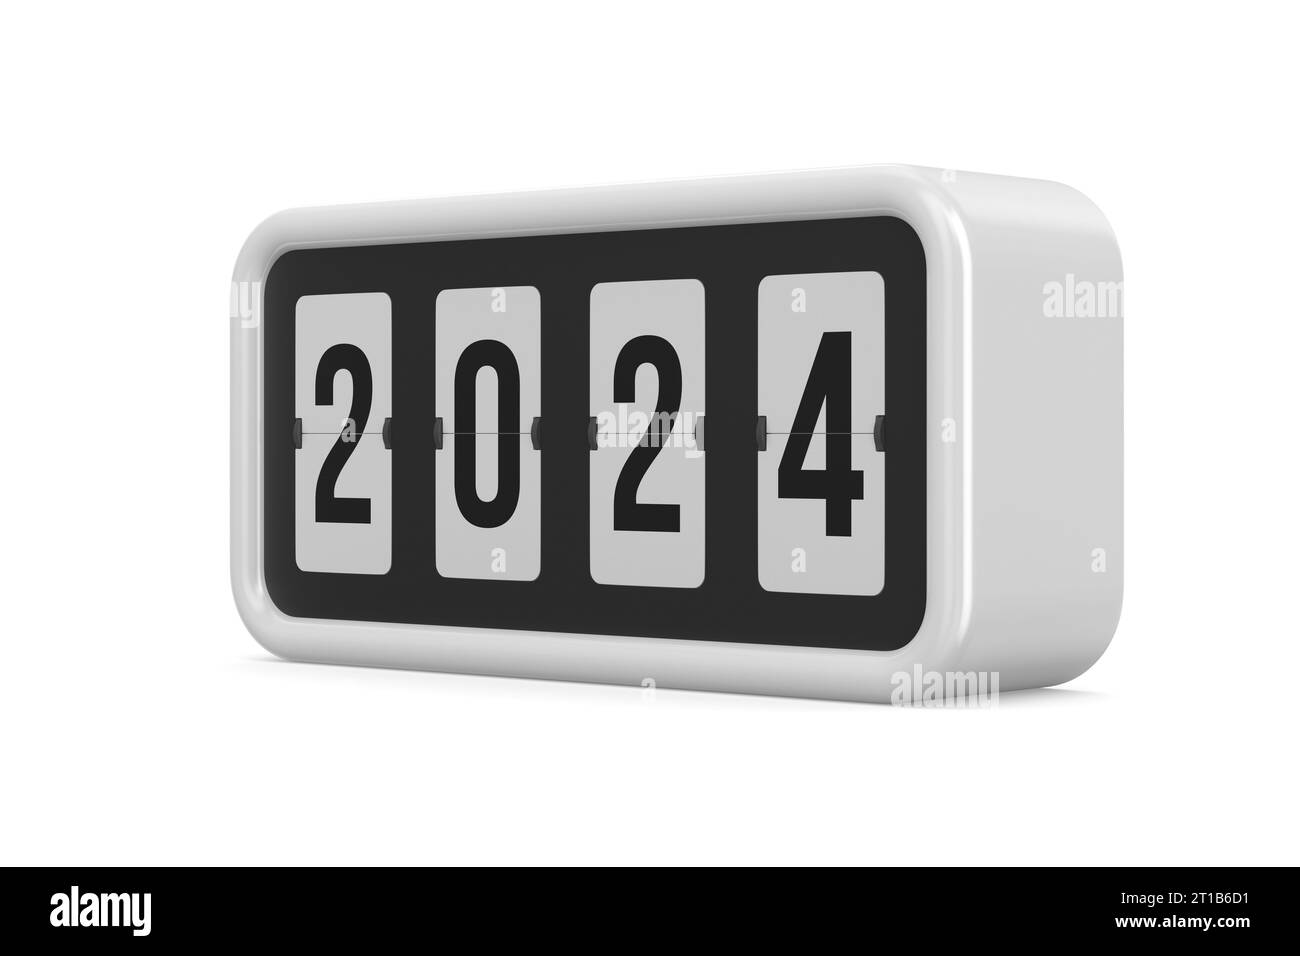 Flip black scoreboard 2024 on white background. Isolated 3D illustration Stock Photo